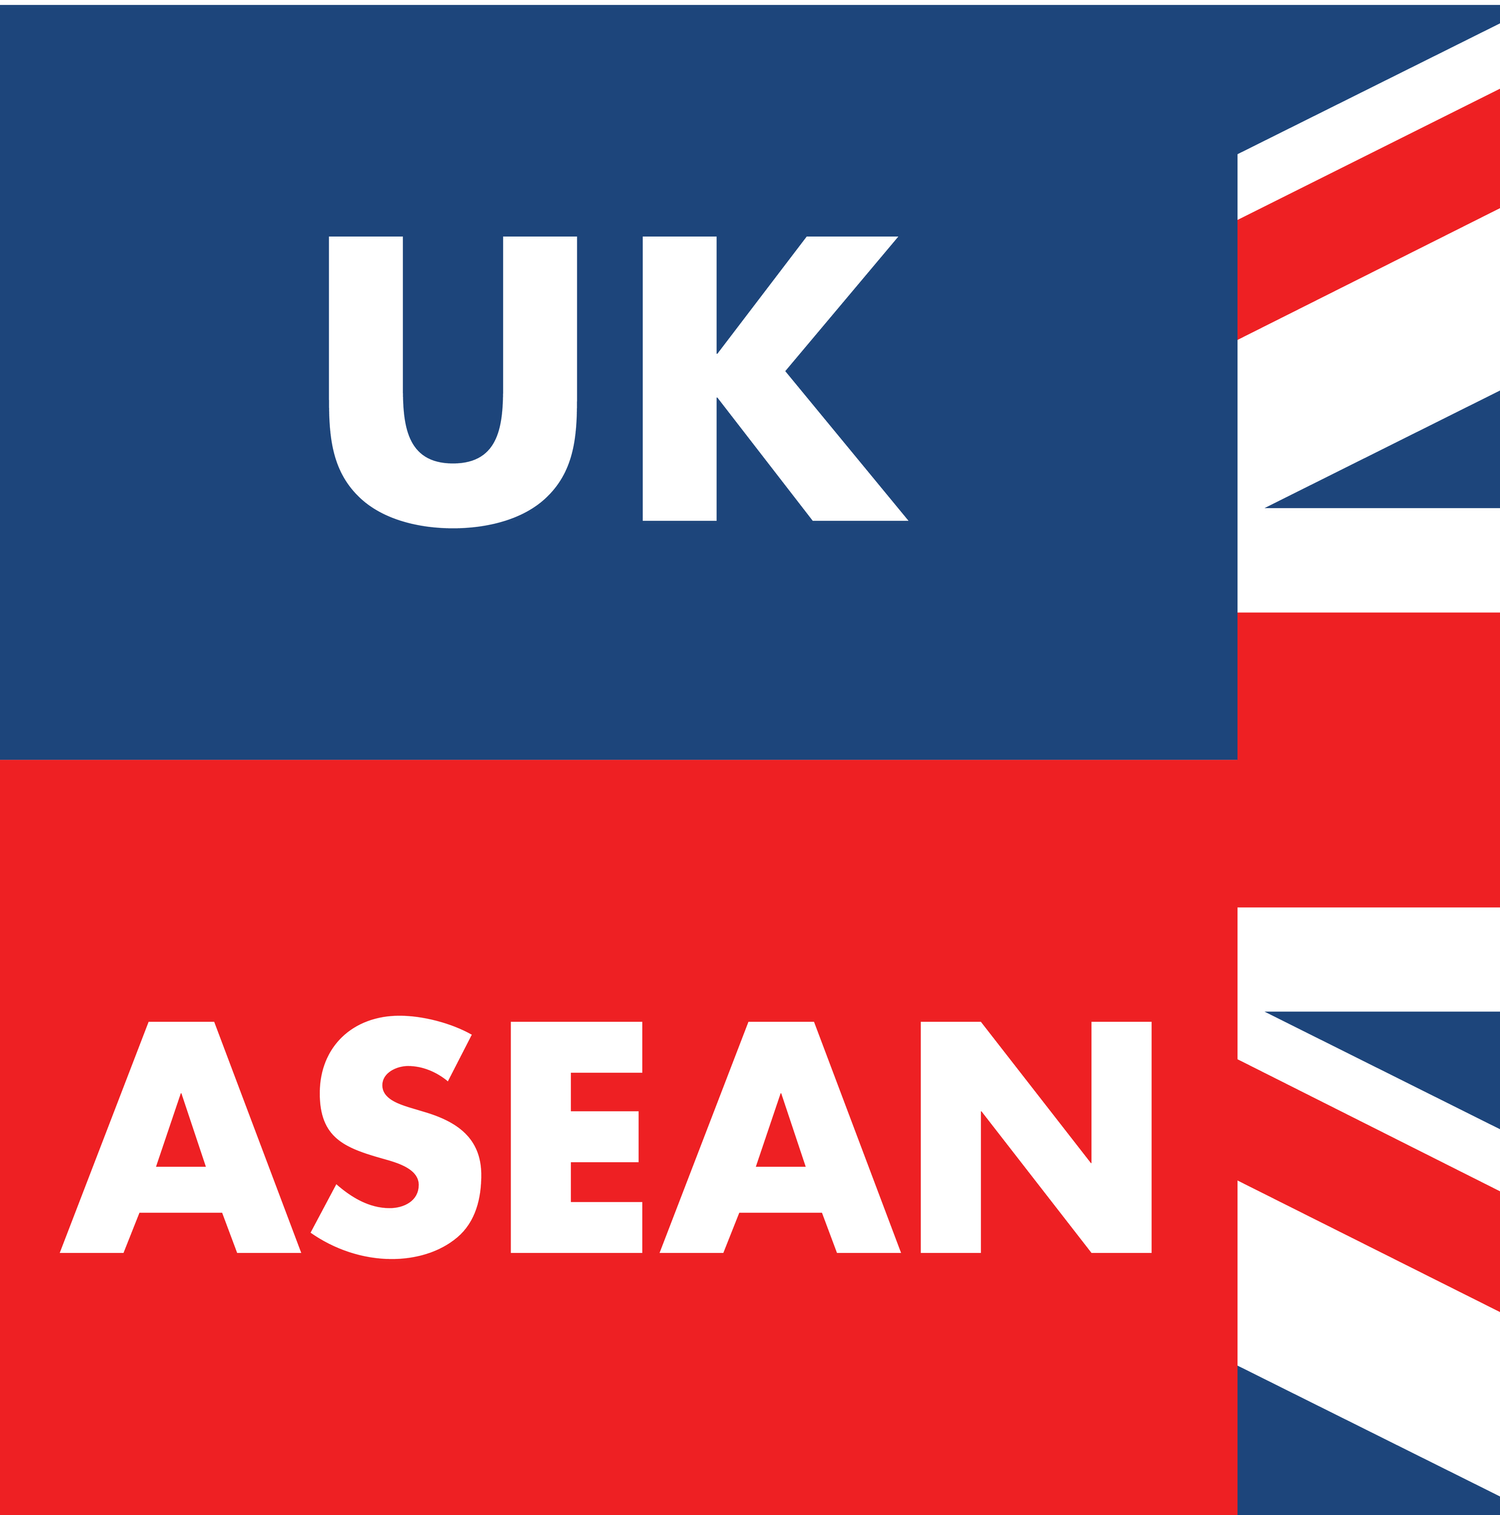 UK-ASEAN Business Council